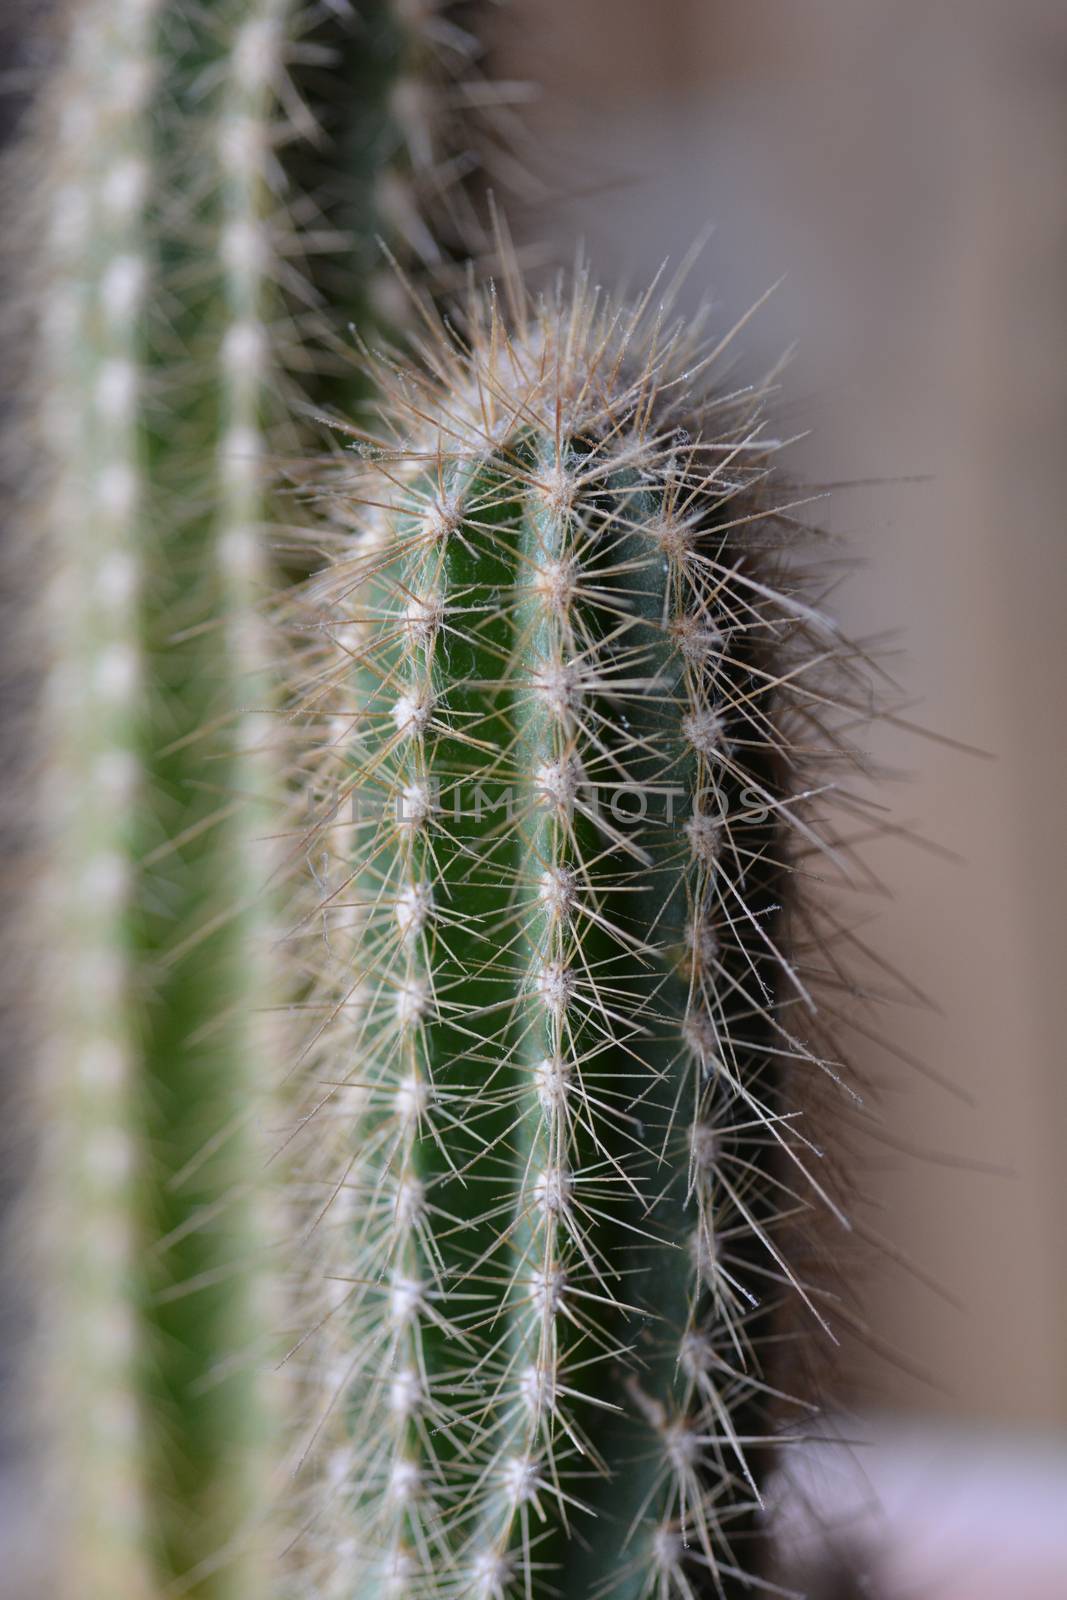 Cactus close up by nahhan